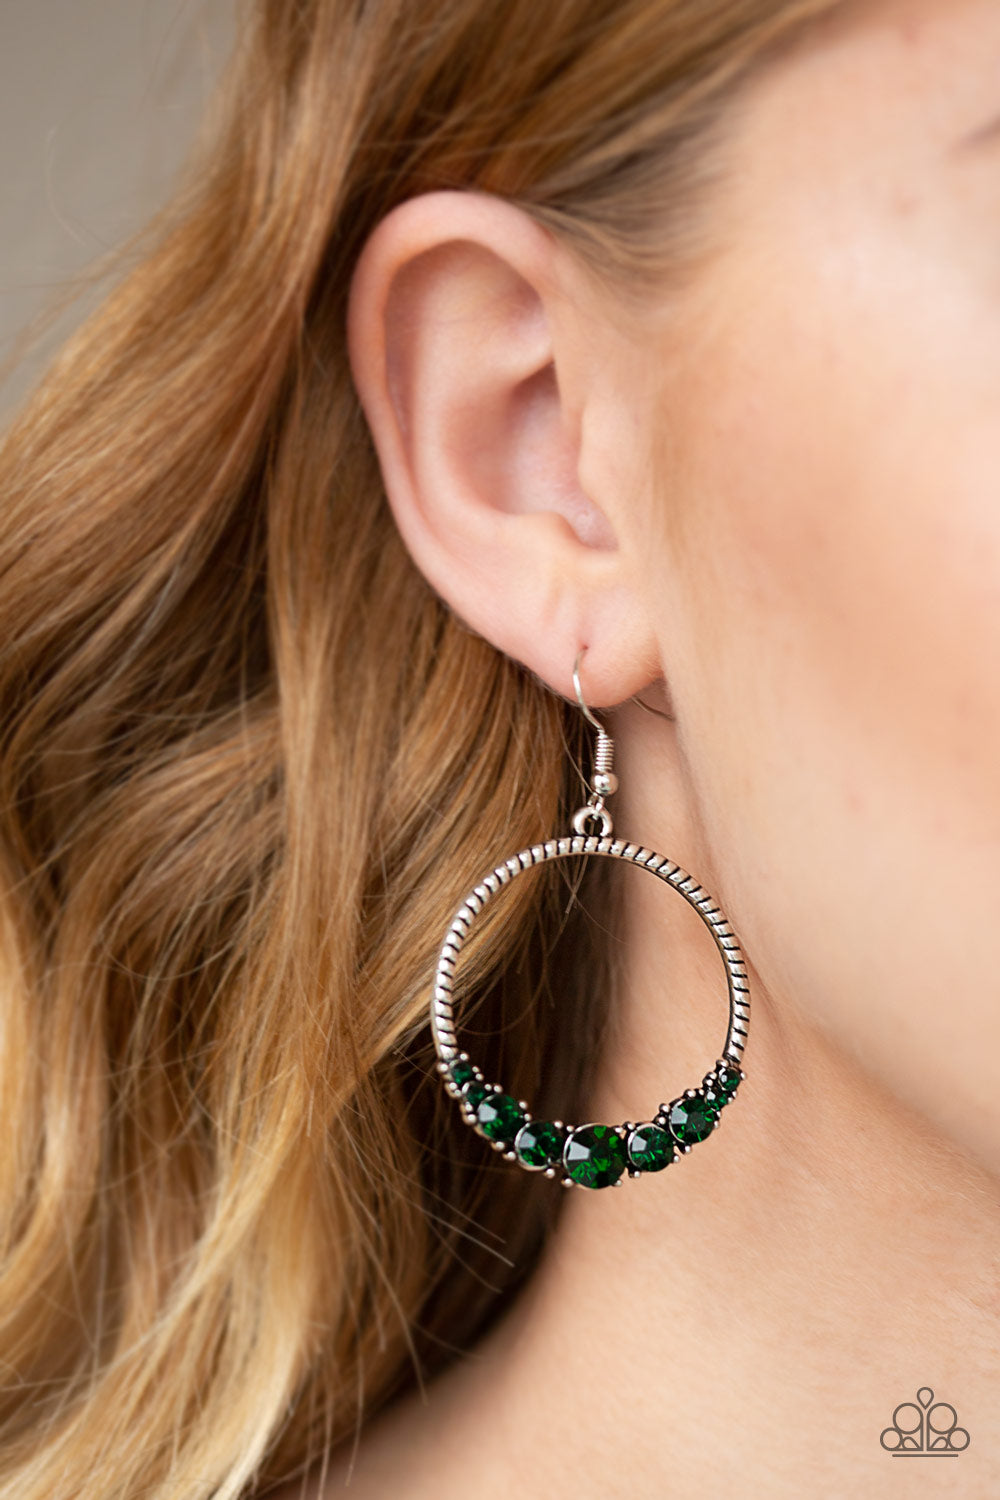 Self-Made Millionaire Earrings - Green